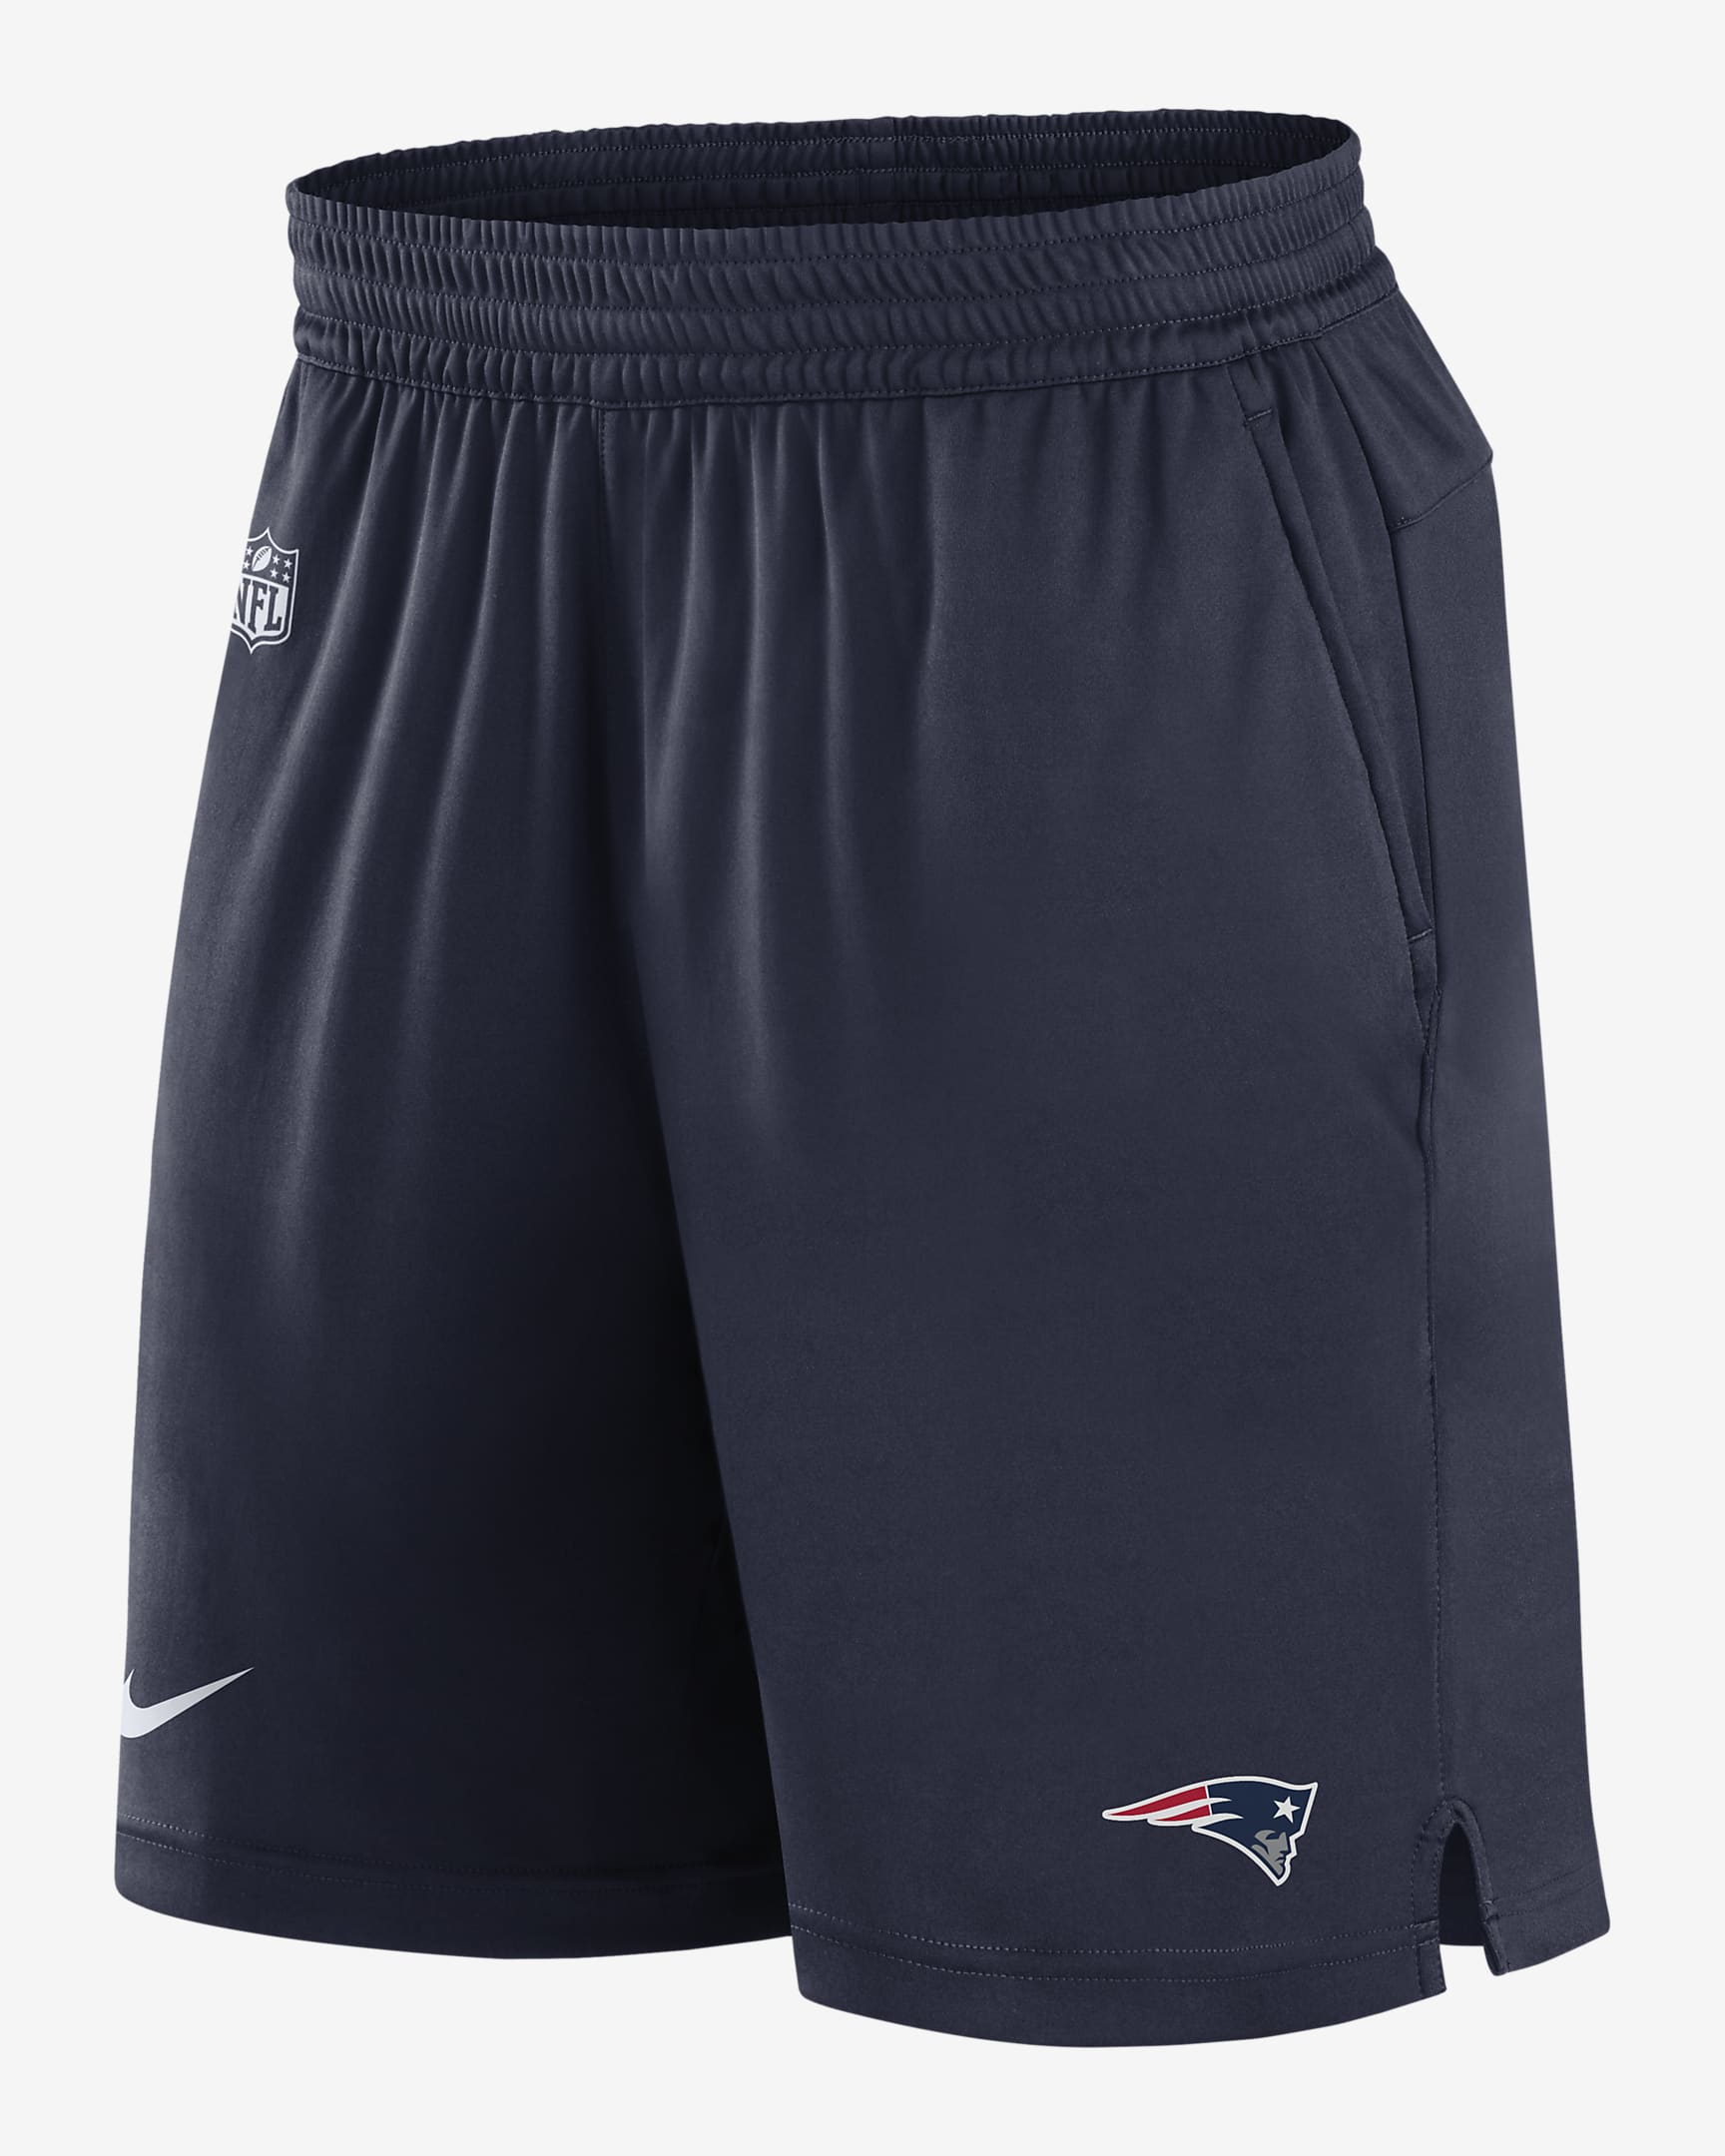 Nike Dri-FIT Sideline (NFL New England Patriots) Men's Shorts. Nike.com